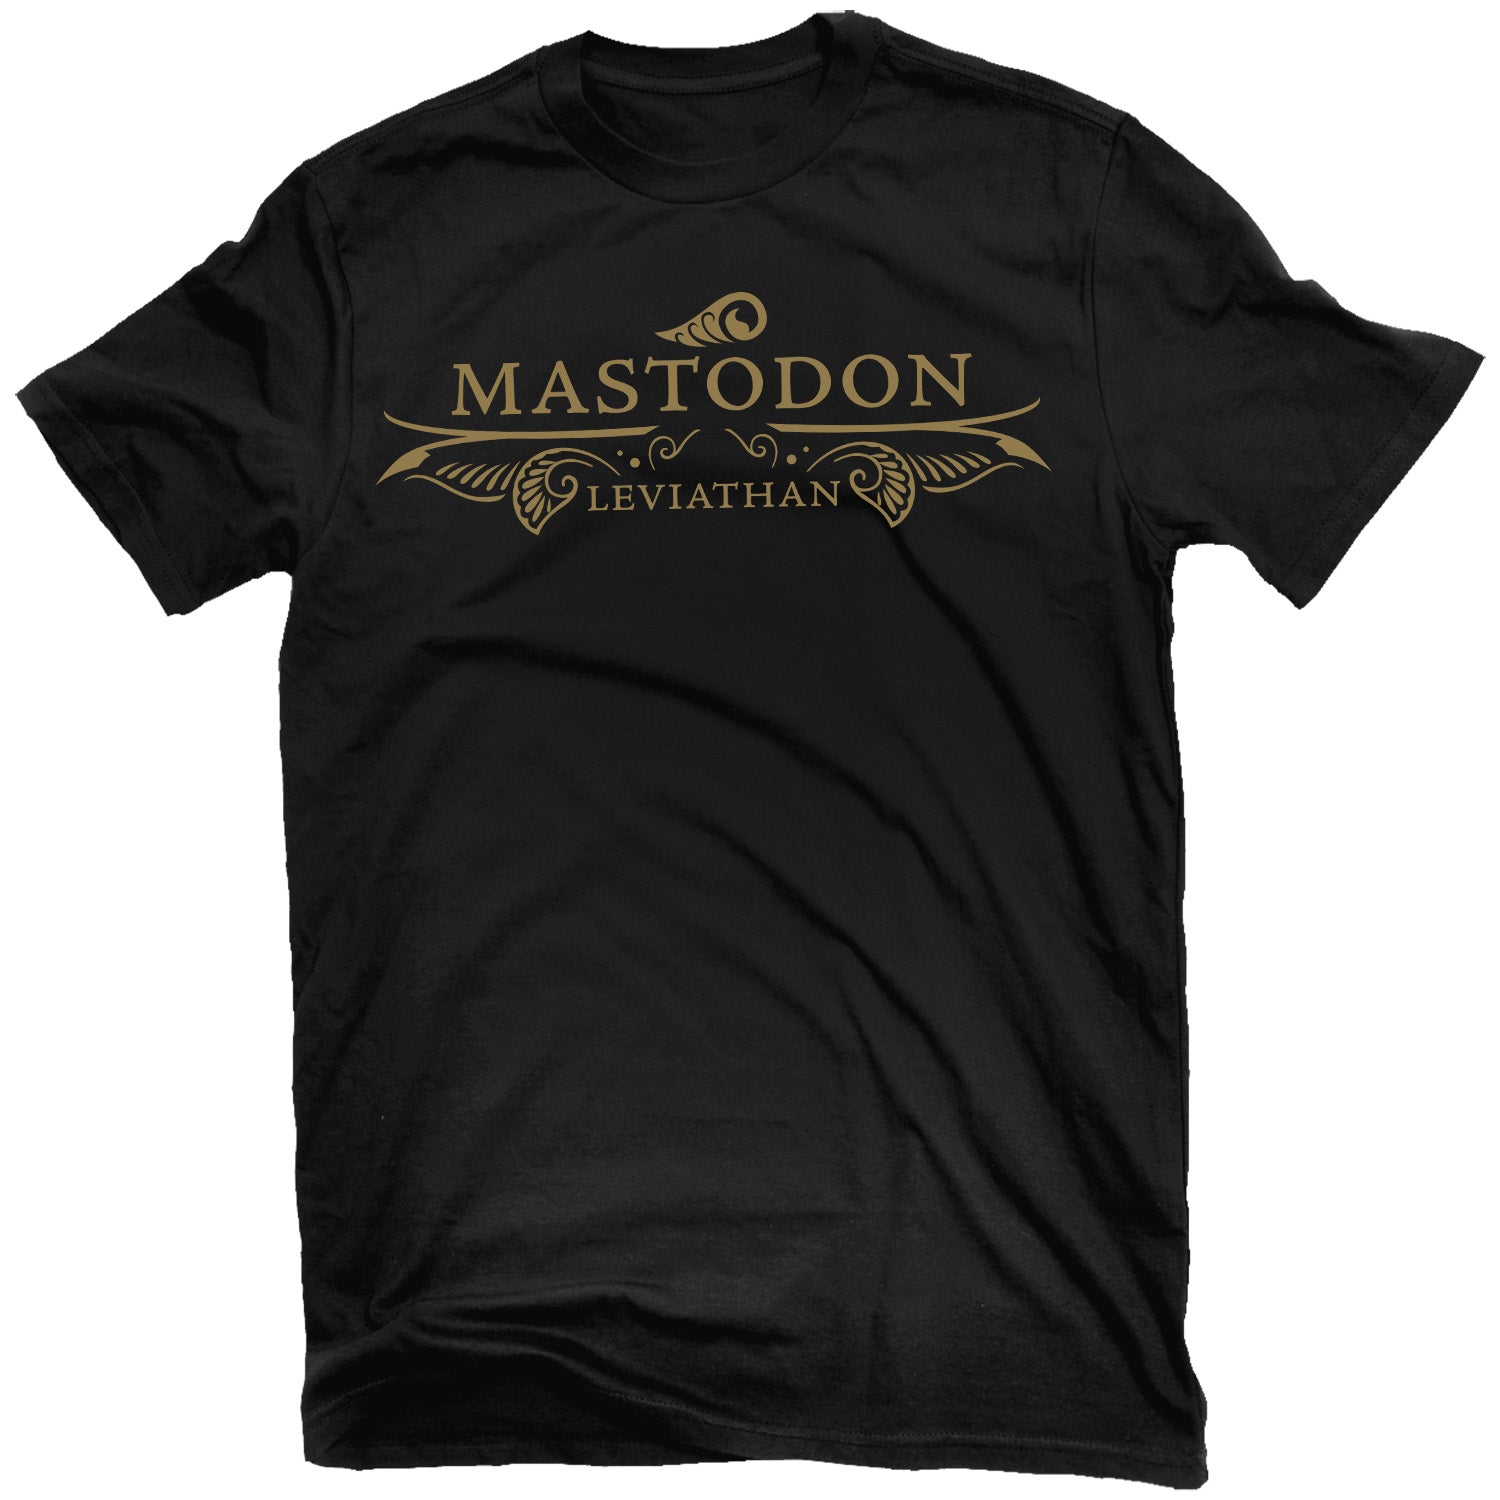 Mastodon "Leviathan Logo" T-Shirt